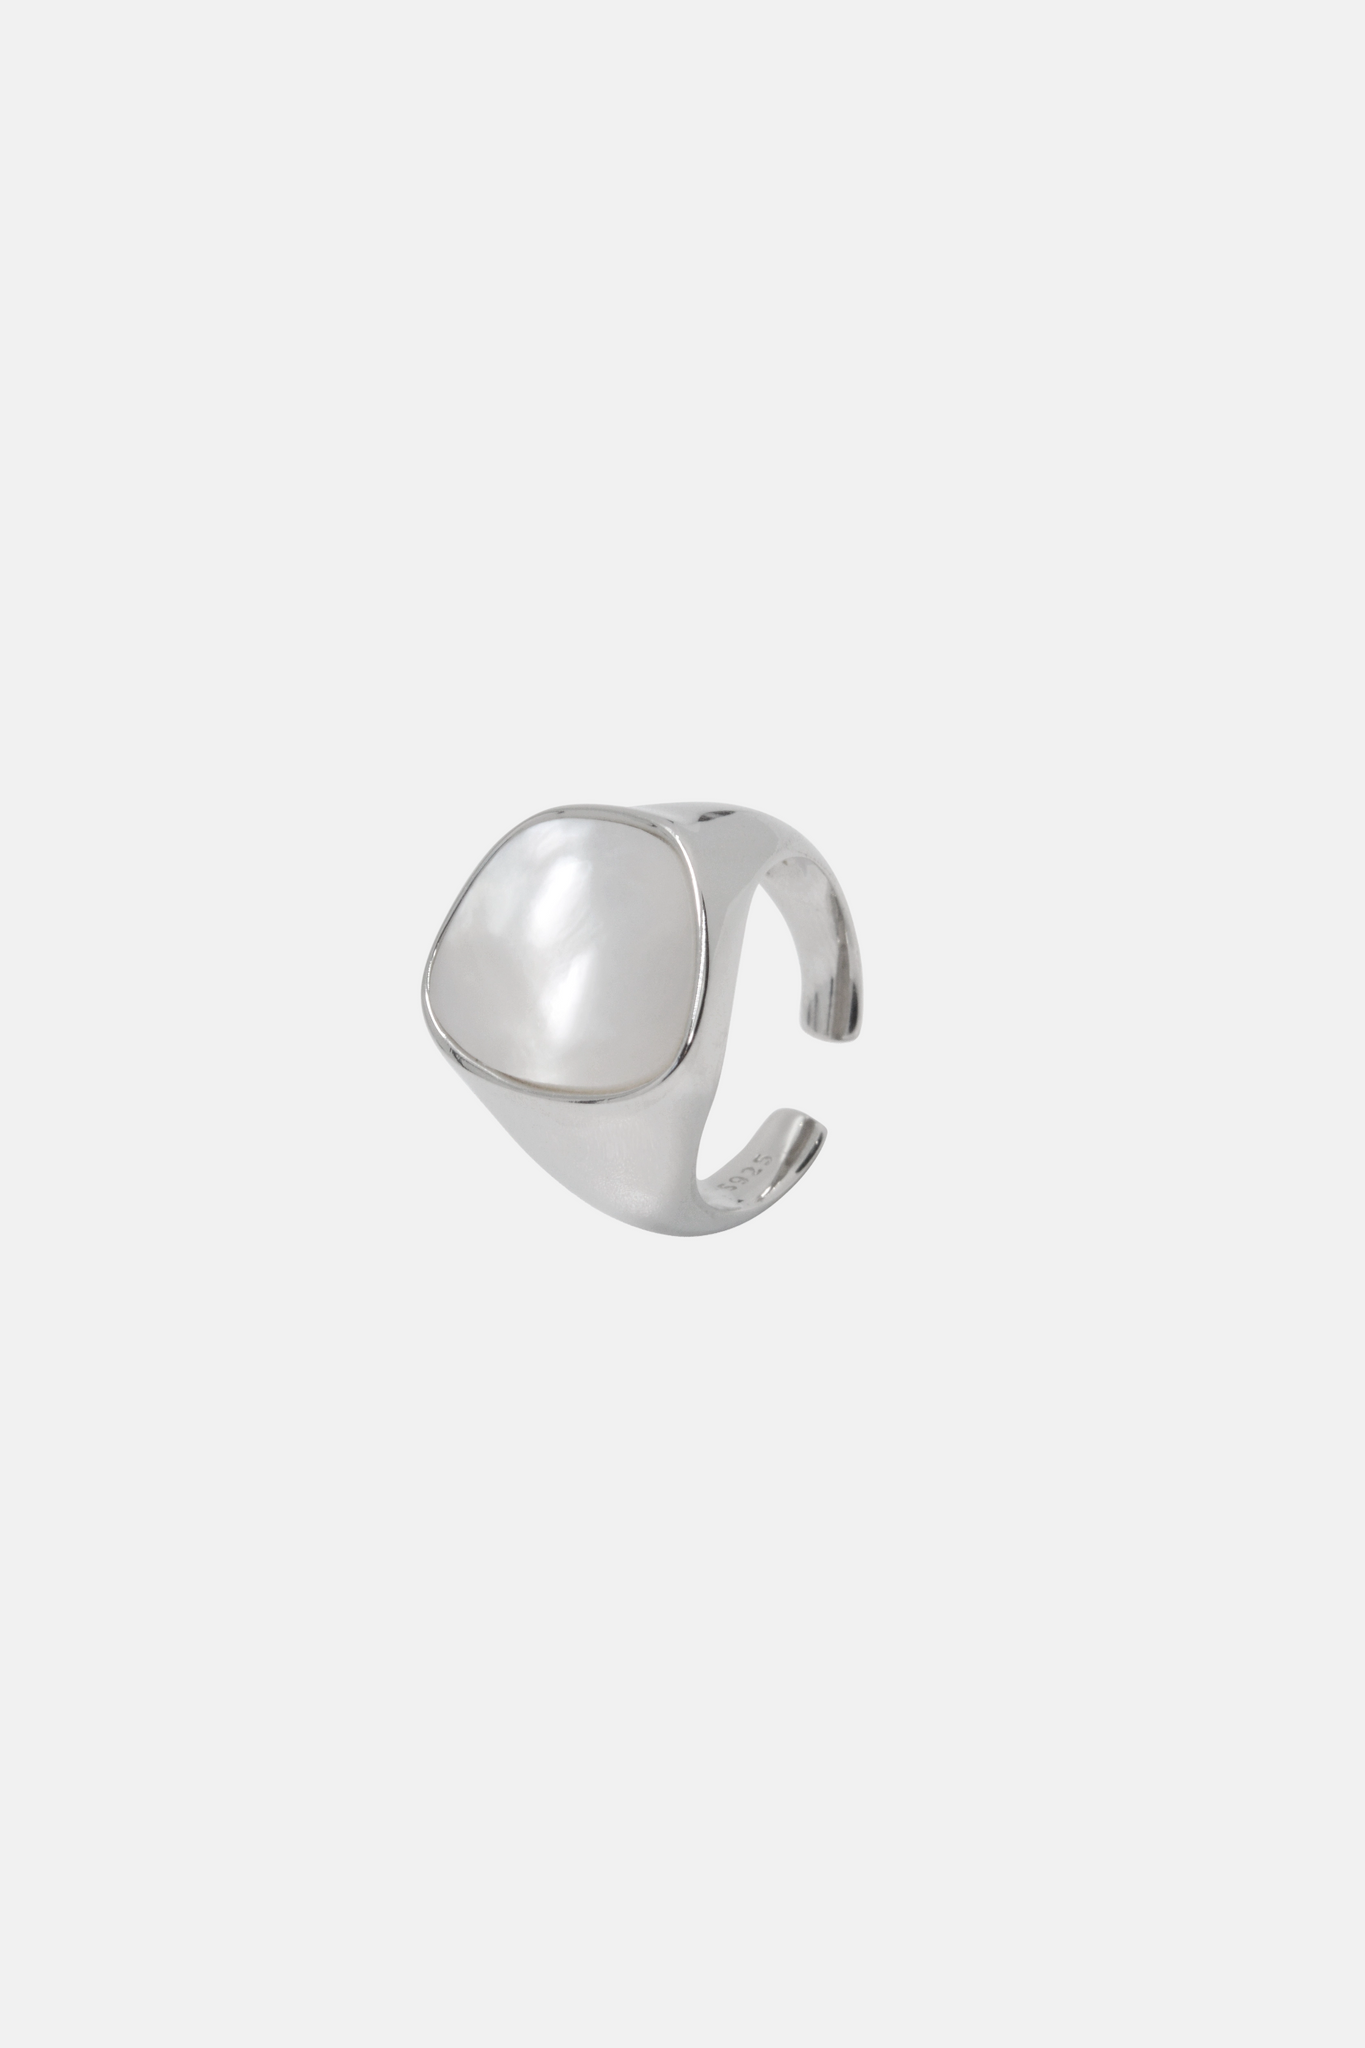 Mermaid - Mega White Seashell Sterling Silver Ring